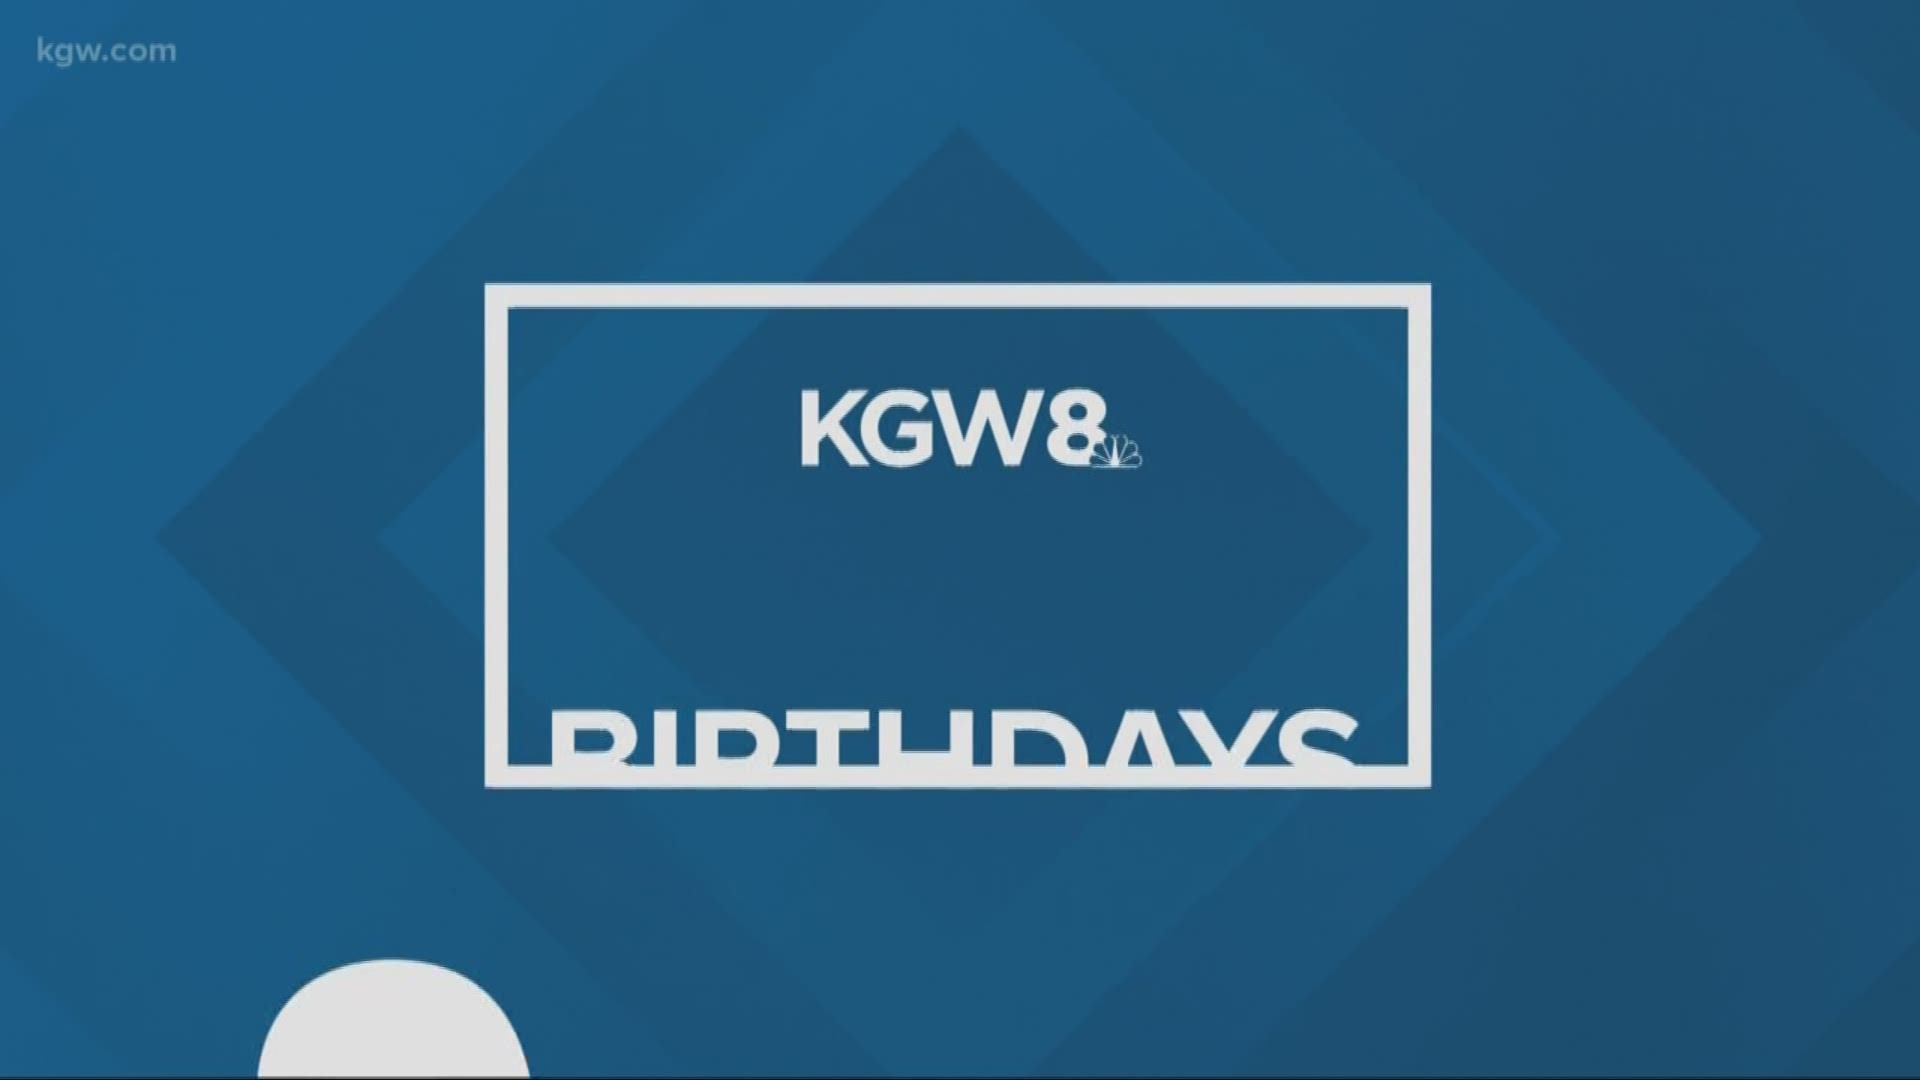 KGW viewer birthdays Apr. 13